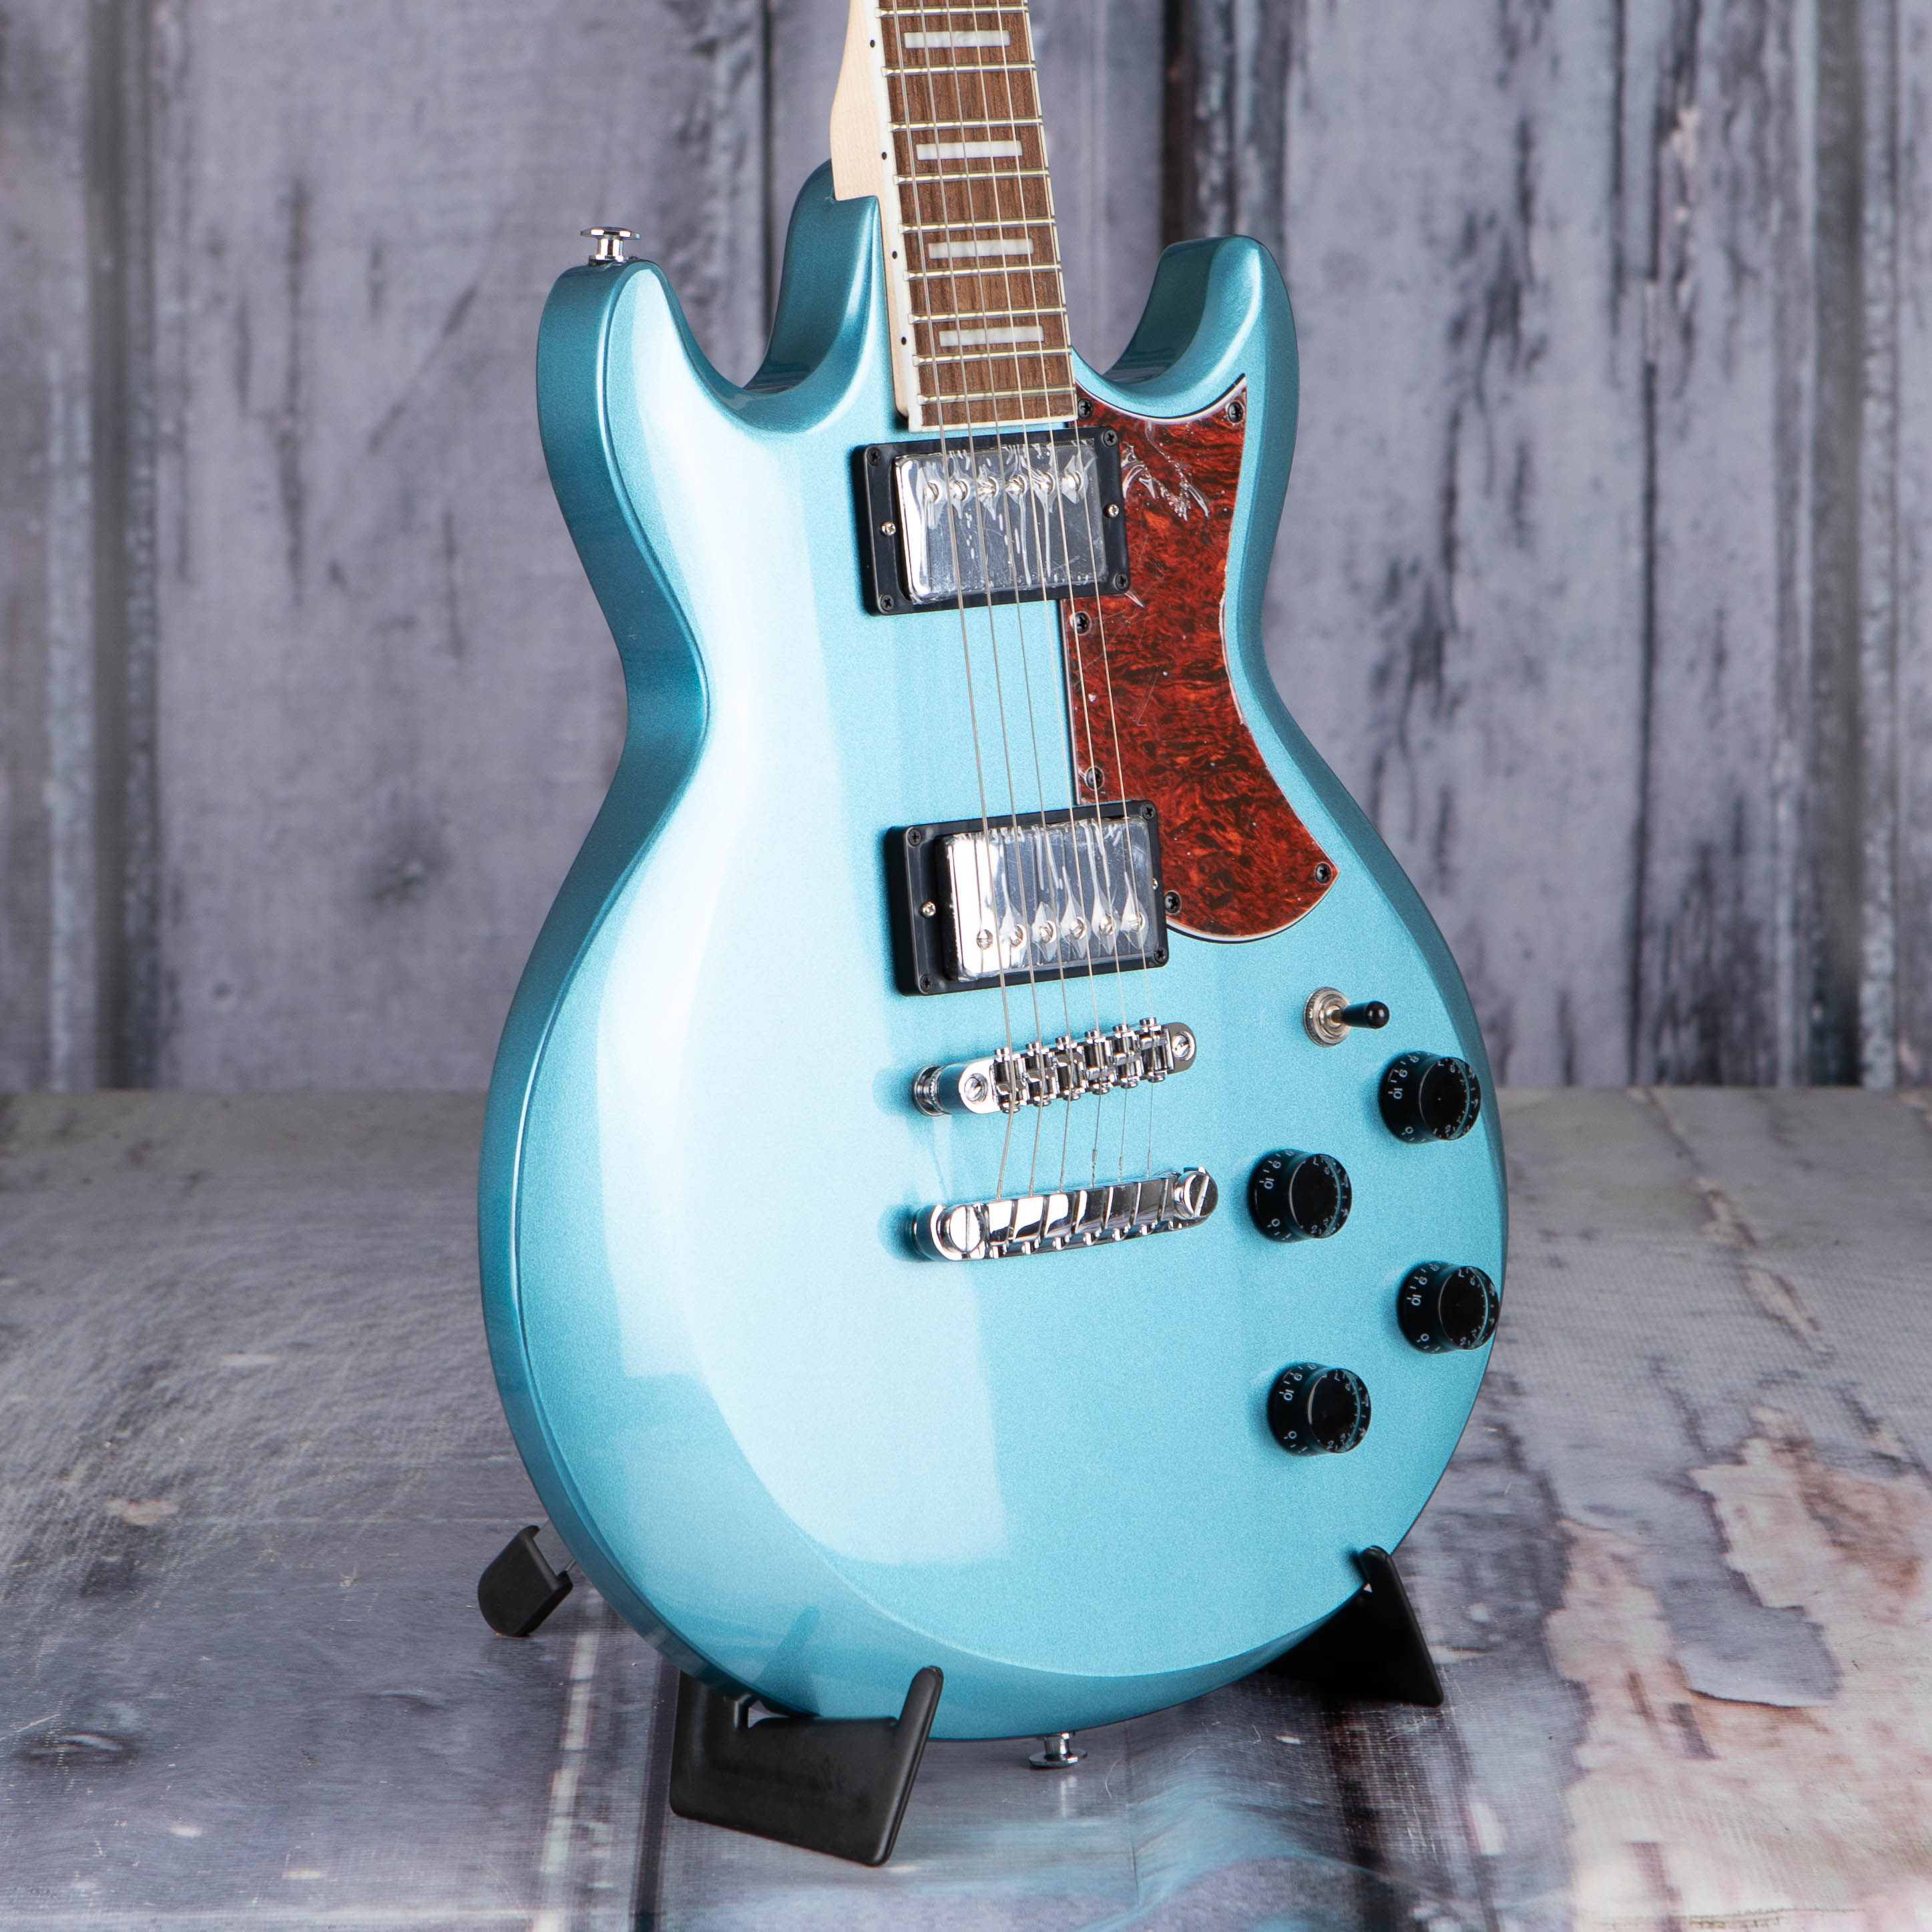 Ibanez AX120 Electric Guitar, Metallic Light Blue, angle